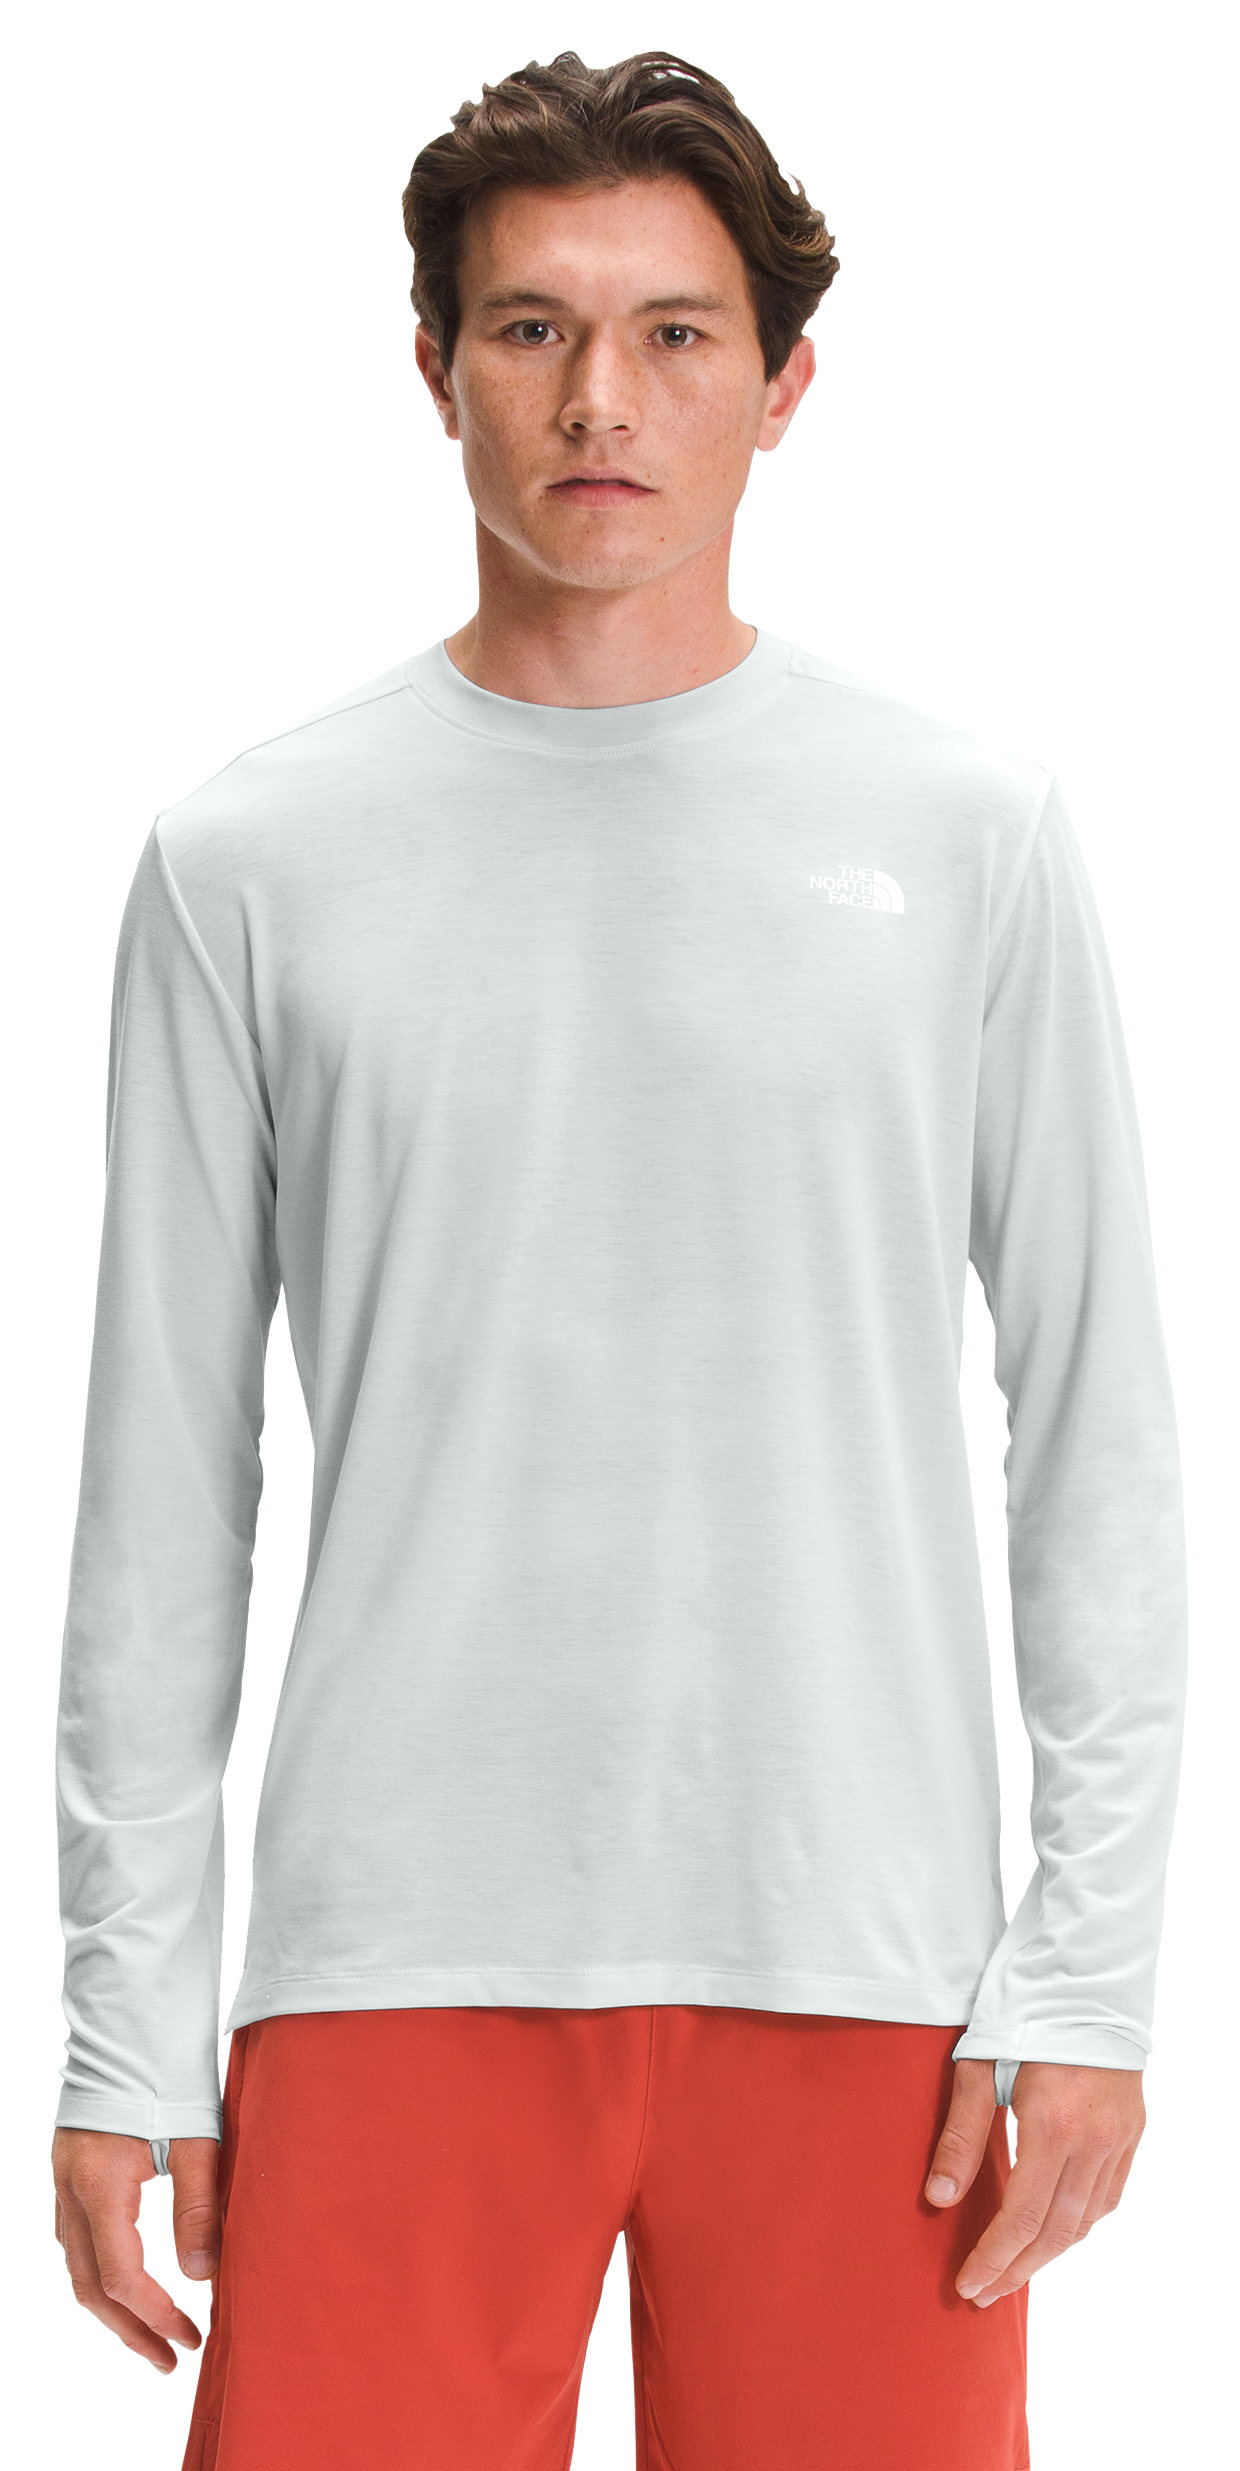 The North Face Wander Long-Sleeve Shirt for Men - Tin Grey - 2XL